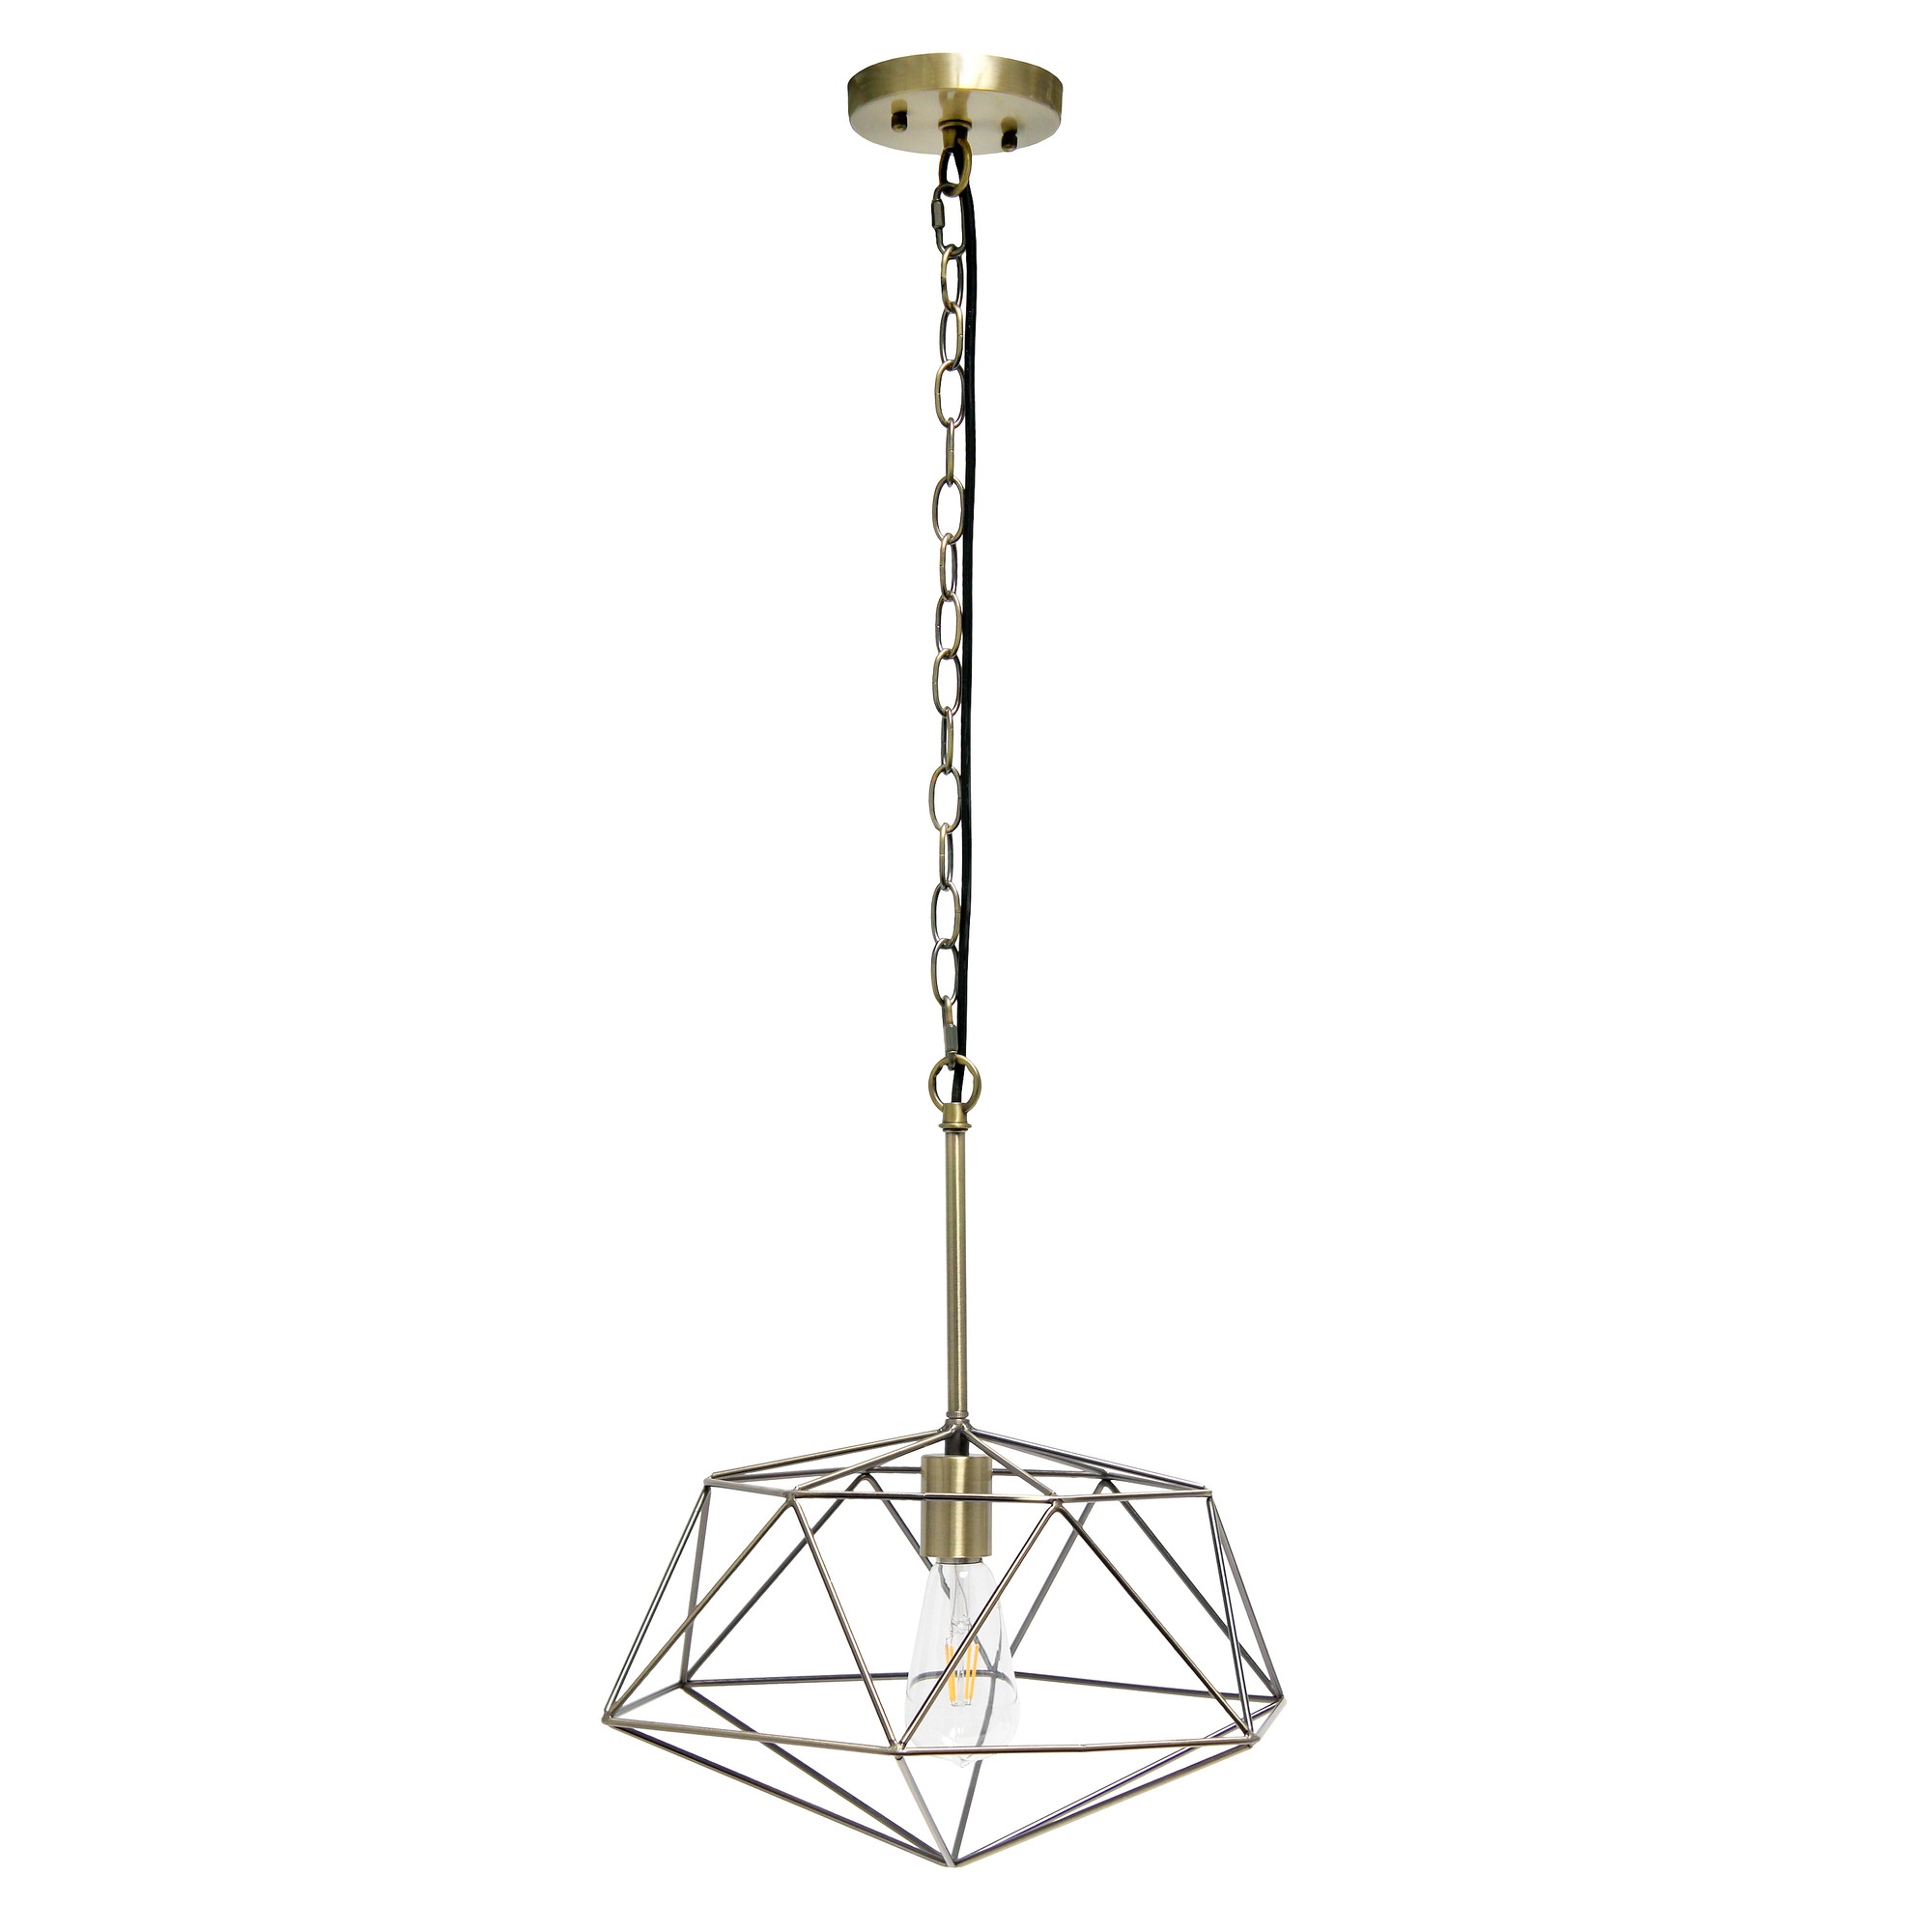 Lalia Home 1 Light 16" Modern Metal Wire Paragon Hanging Ceiling Pendant Fixture, Antique Brass